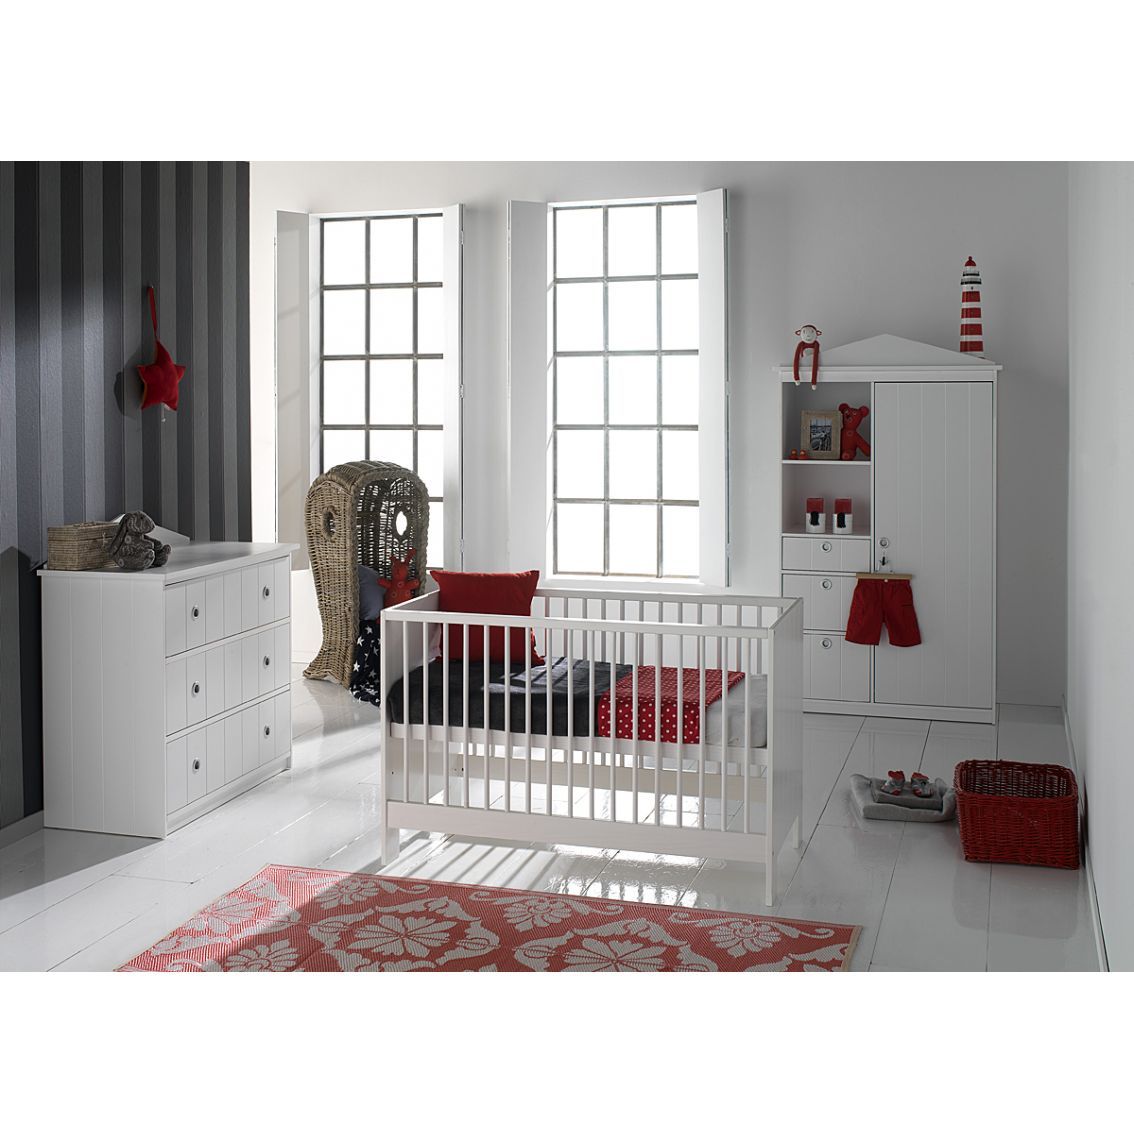 Baby Wallpaper For Nursery HD In Imageci